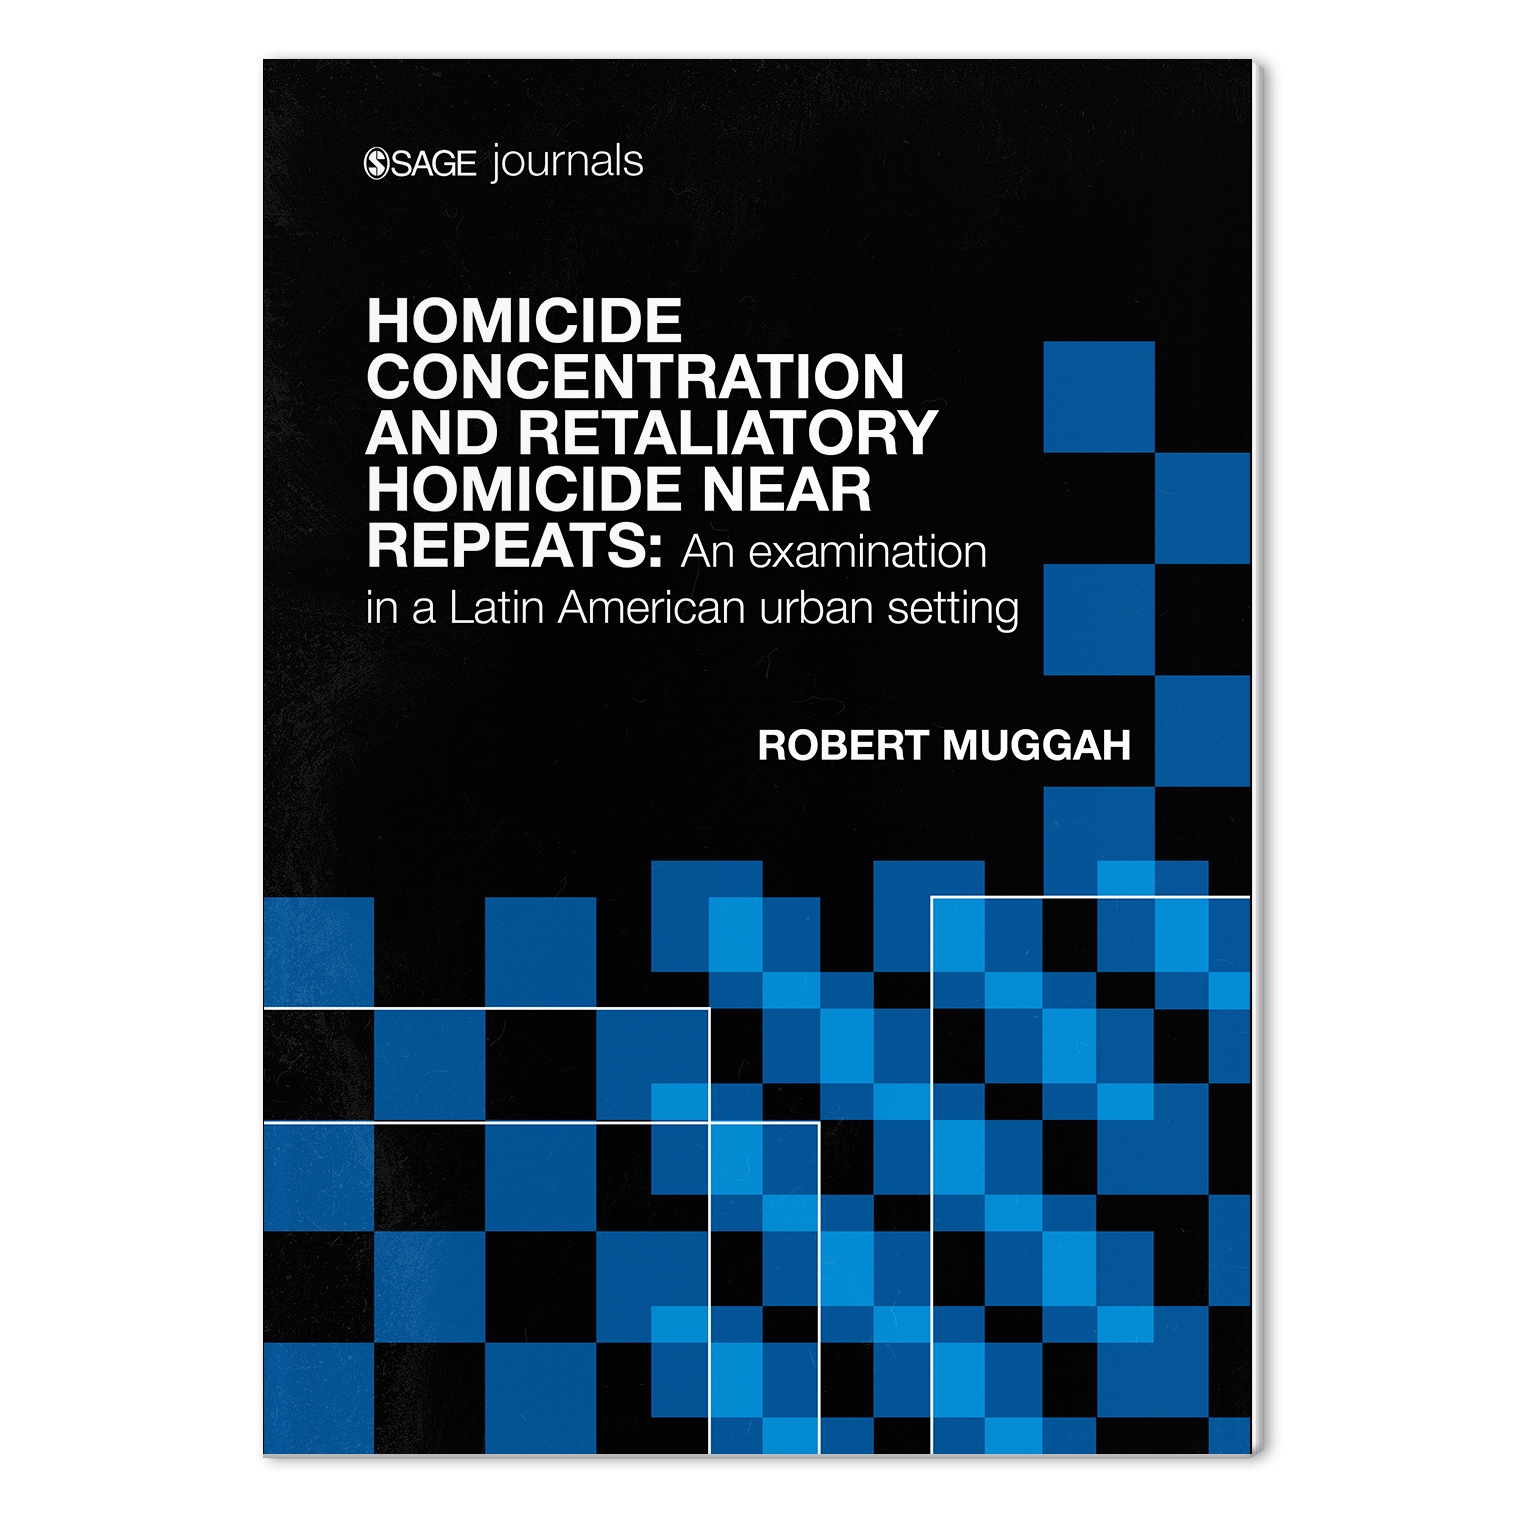 Homicide concentration and retaliatory homicide near repeats: